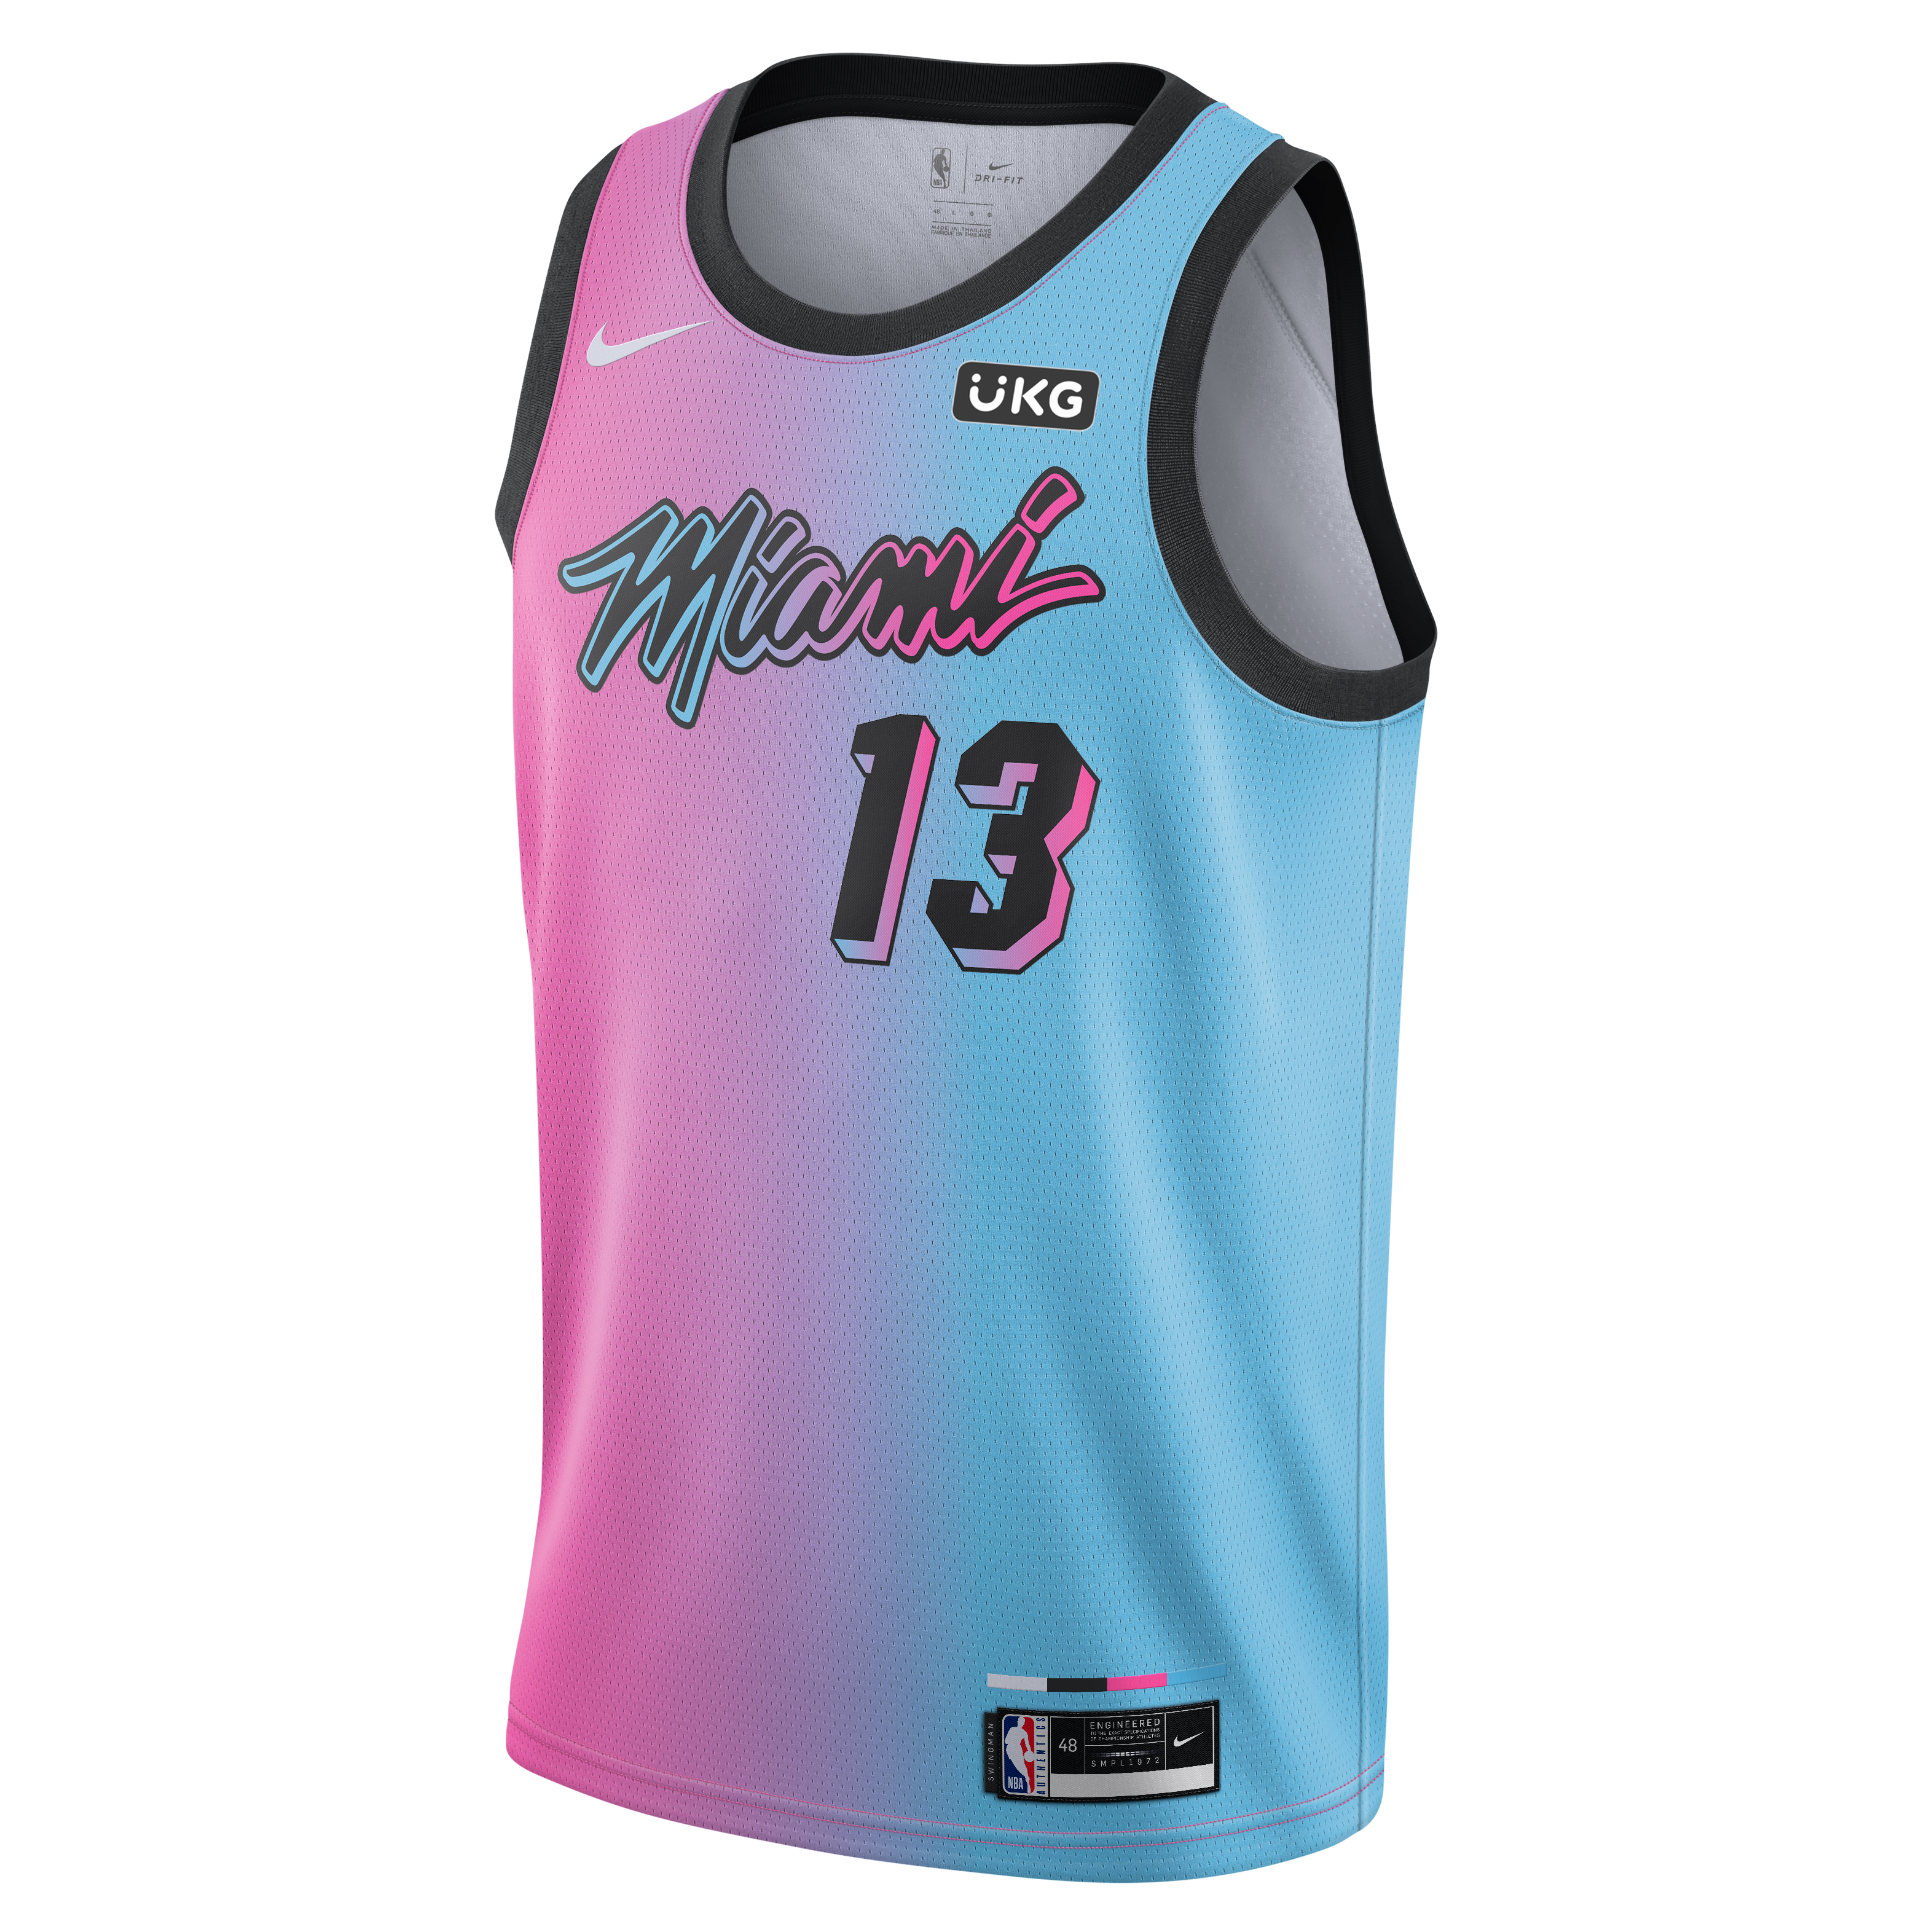 Miami Heat Vice Versa Authentic Jersey 